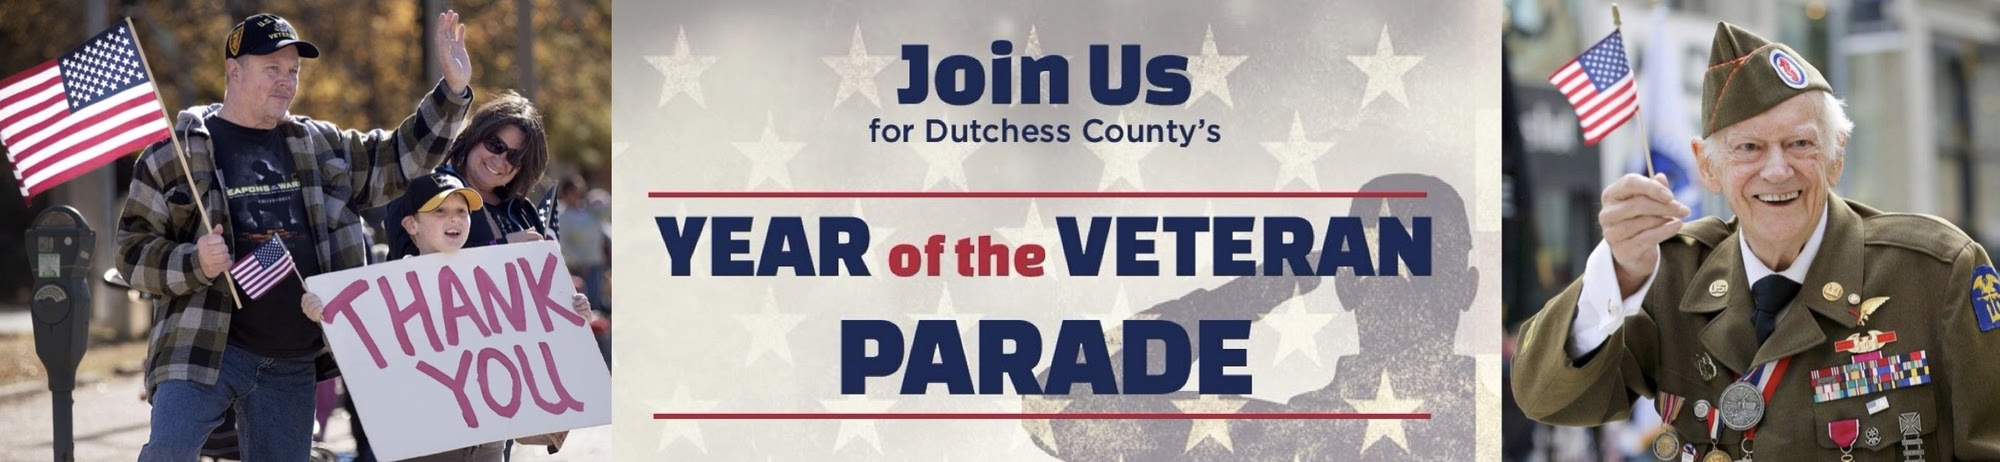 Year of the Veteran Parade